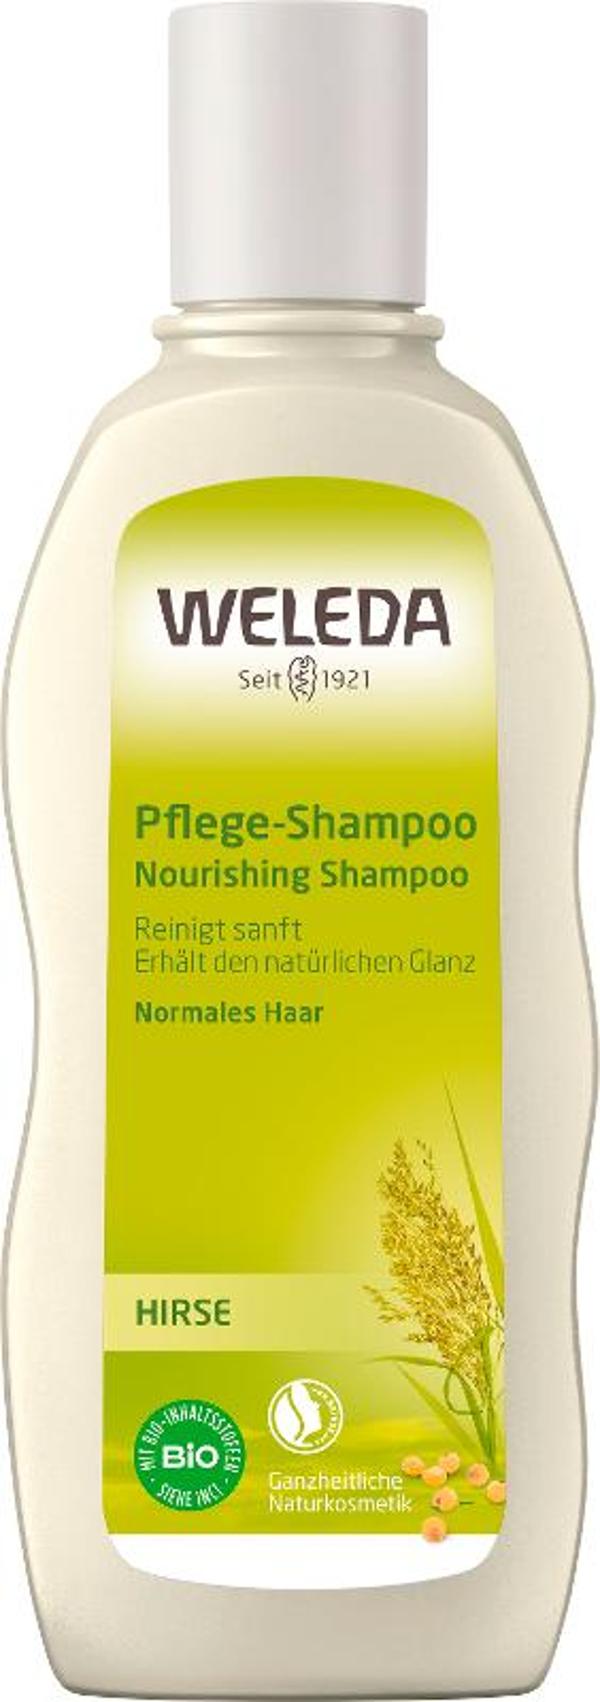 Produktfoto zu Hirse Pflege Shampoo - 190ml